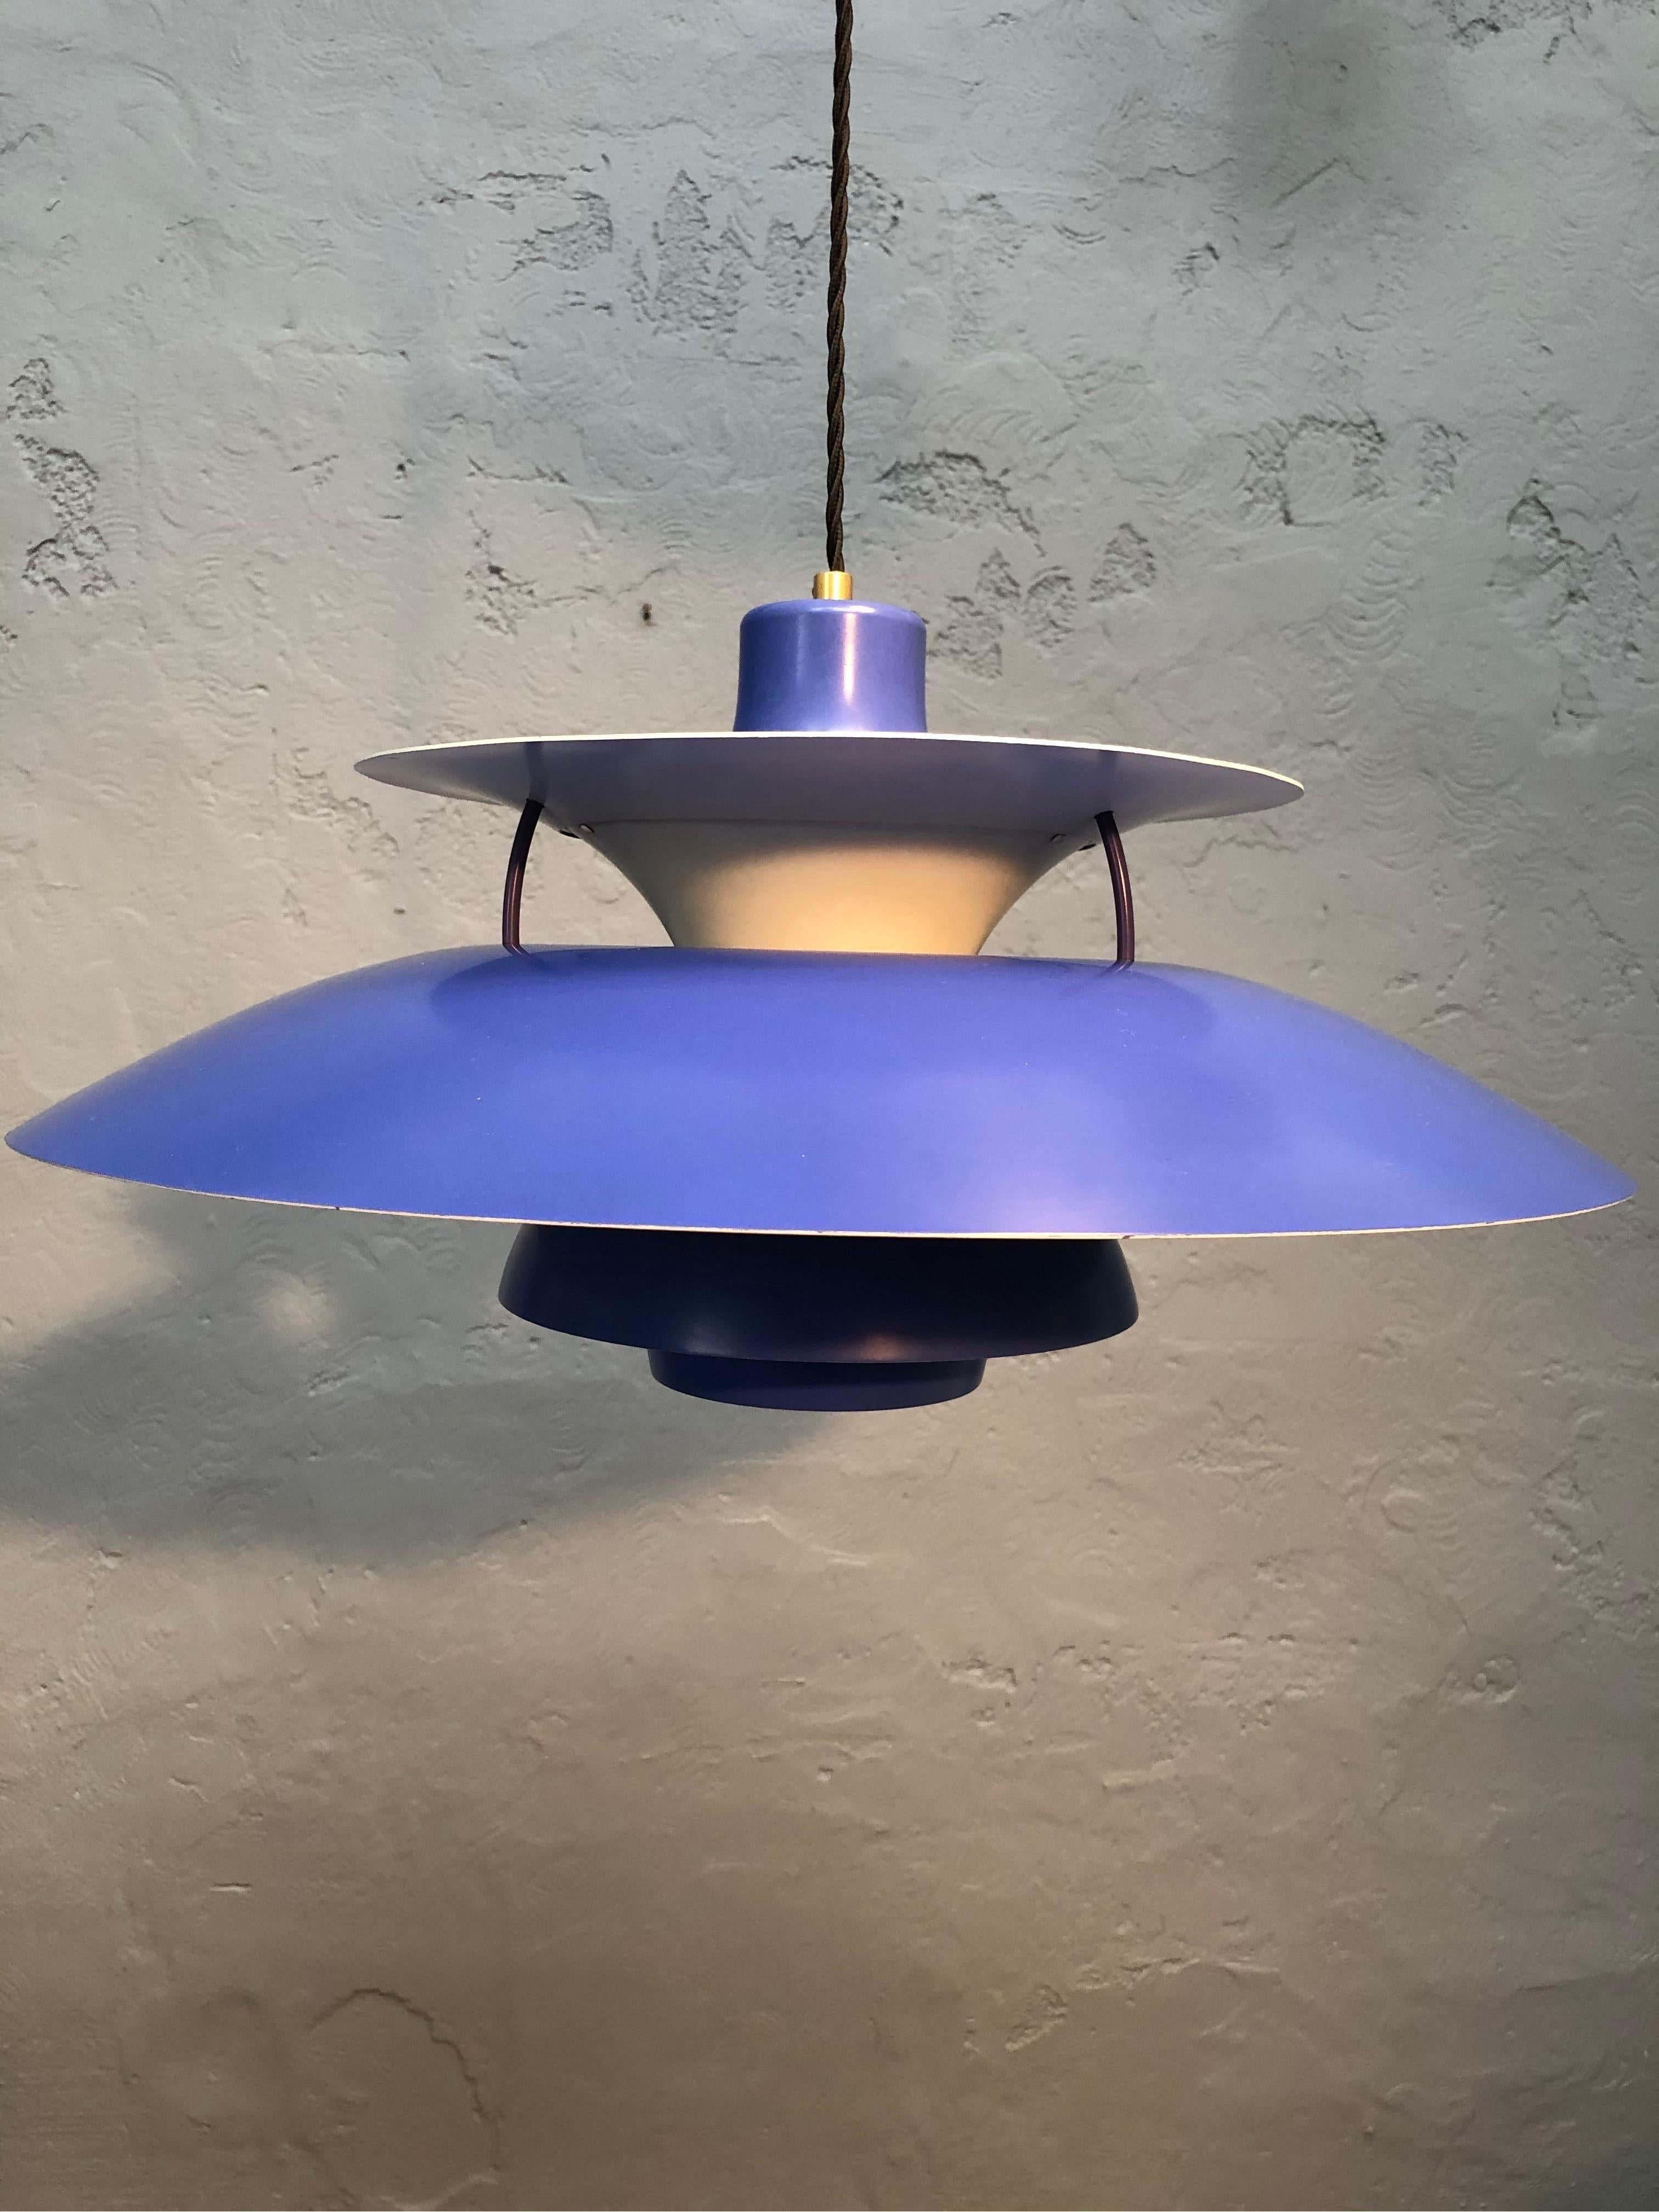 Mid-Century Modern Iconic Vintage Poul Henningsen PH 5 Chandelier Pendant Lamp from 1959